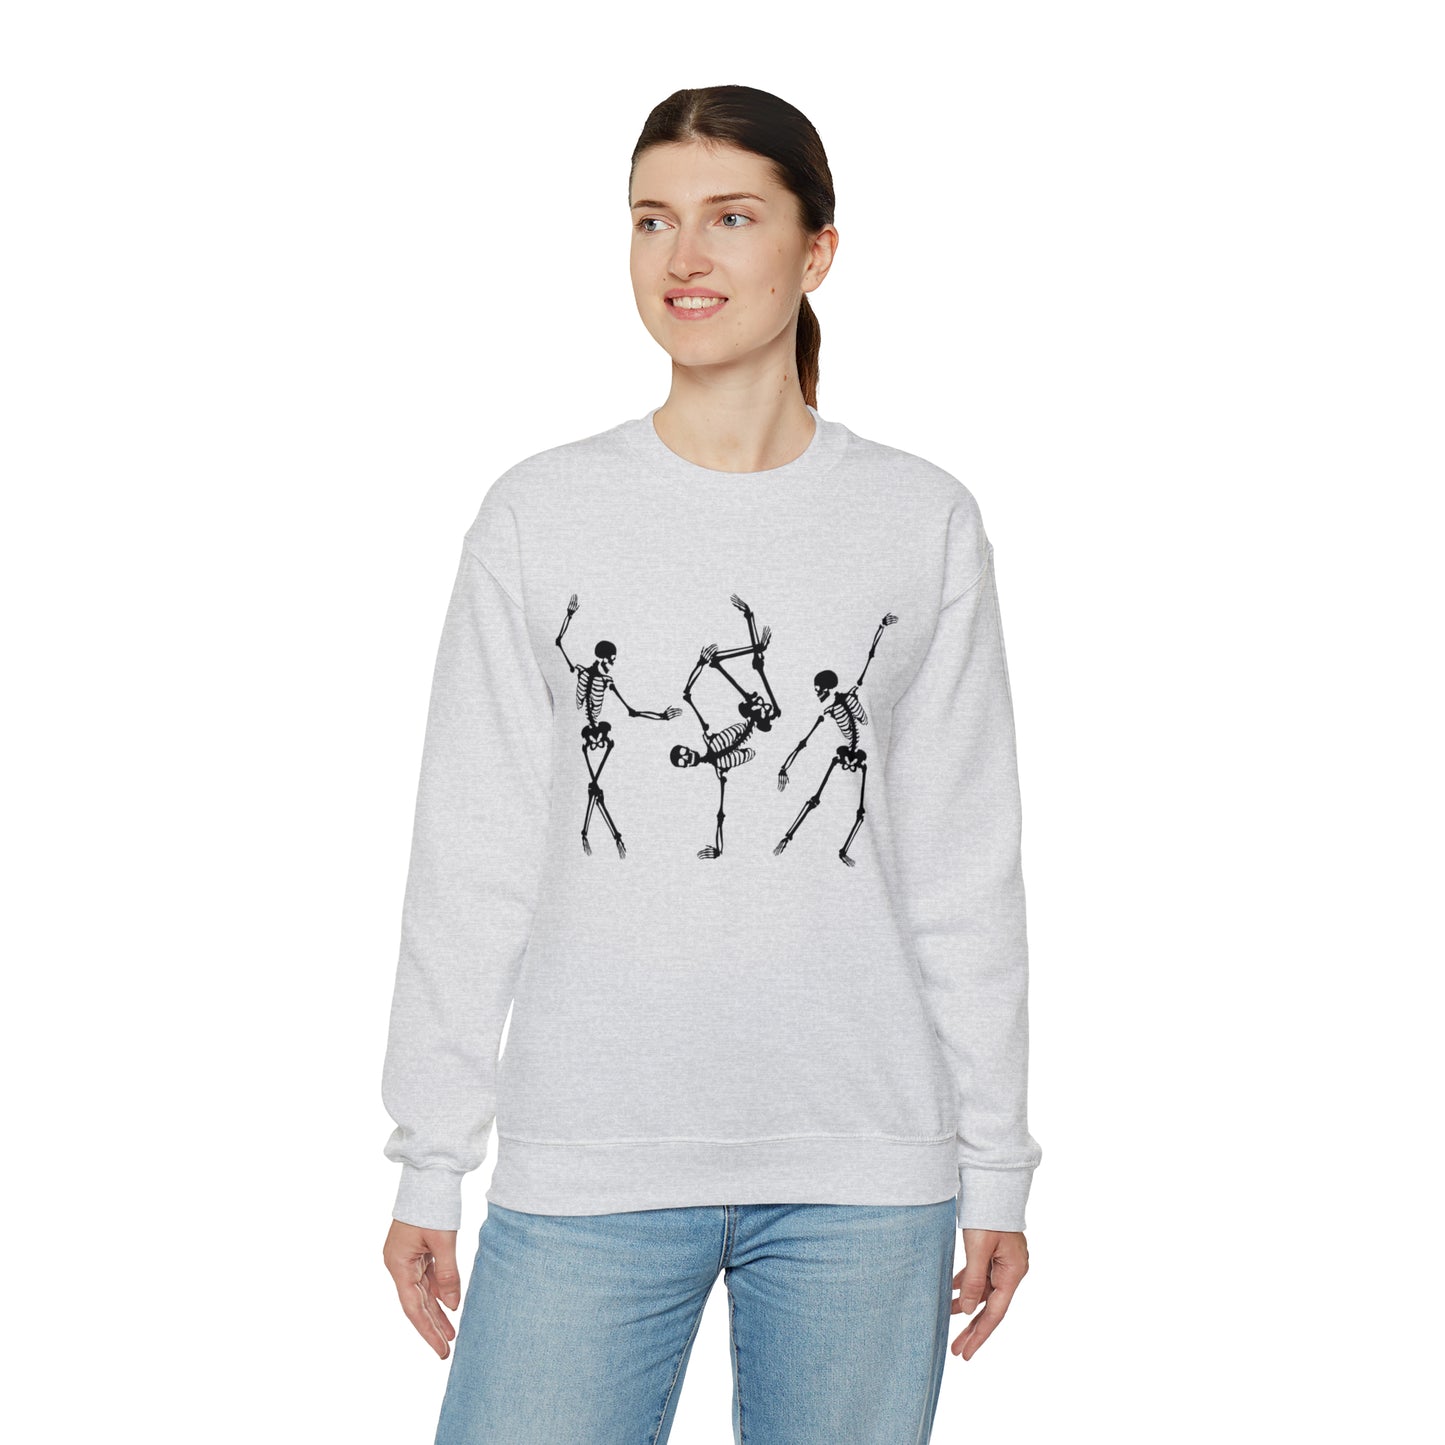 Dancing Skeleton Sweatshirt, Funny Halloween Sweatshirt for Women, Spooky Season Sweater Weather Shirt Gift for Her, Fall T-shirt